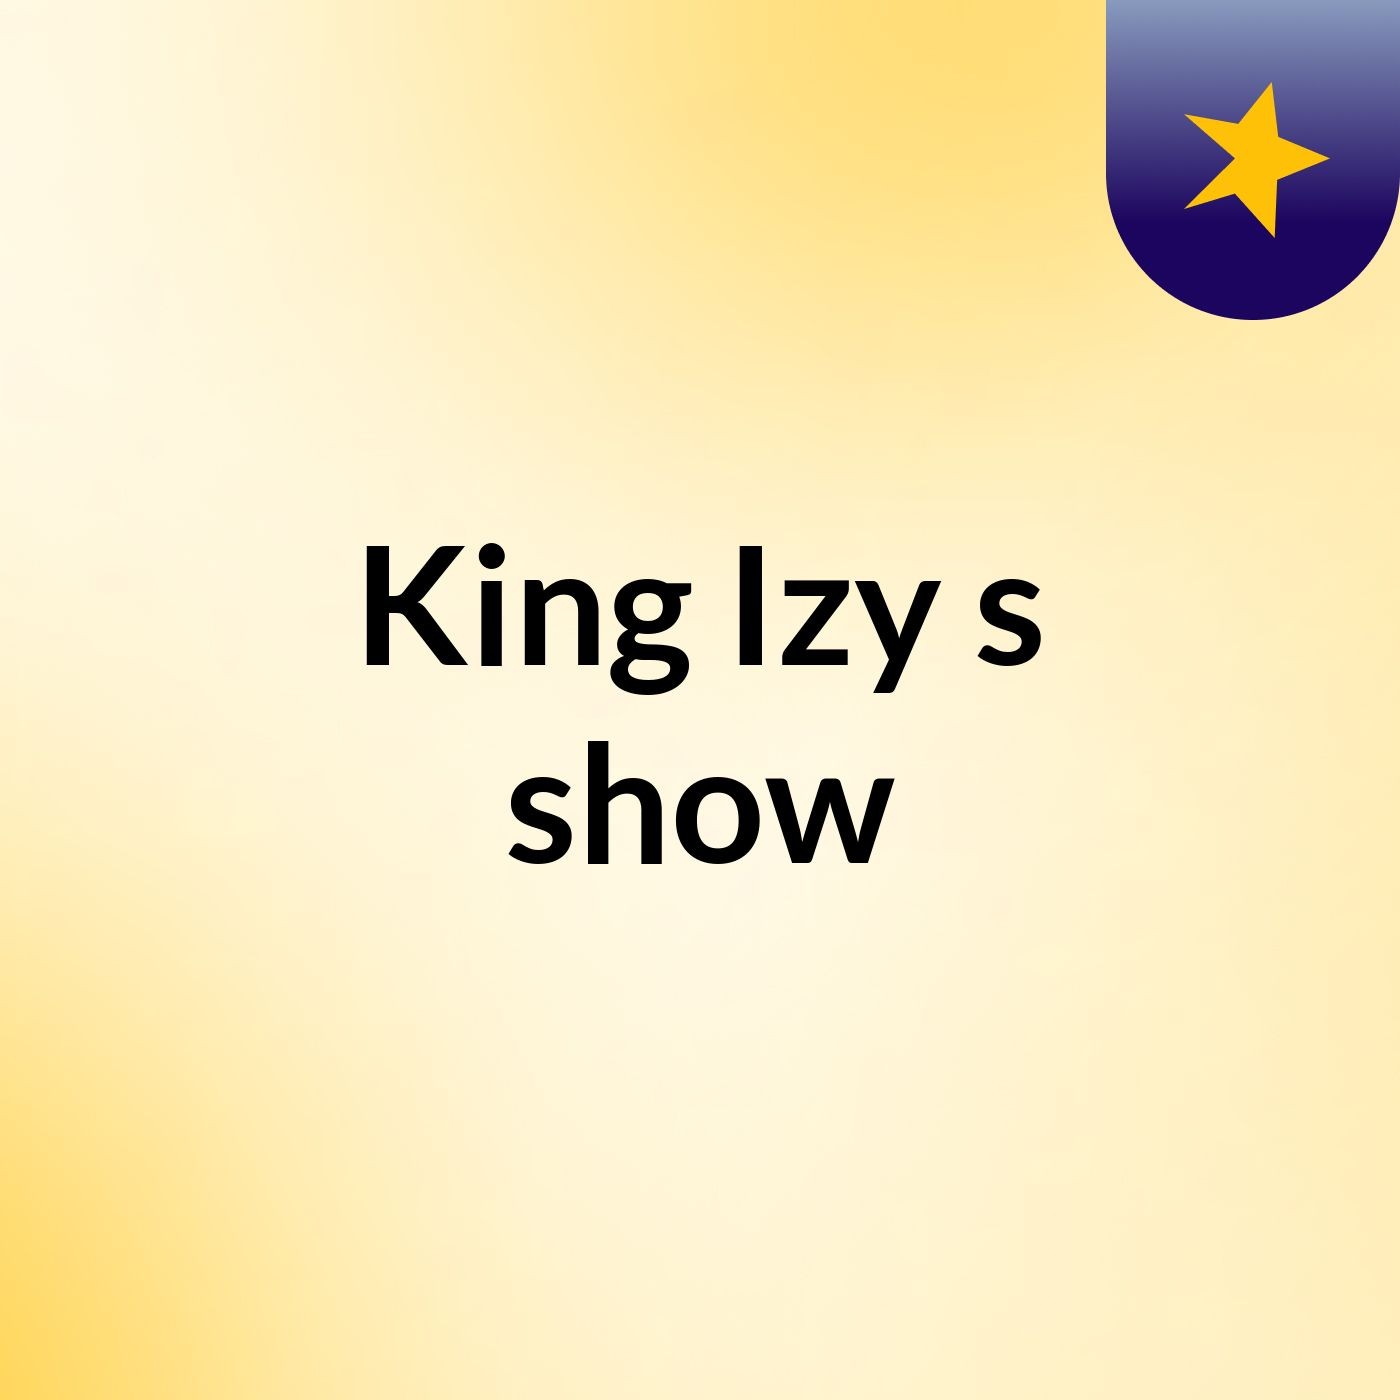 King Izy's show